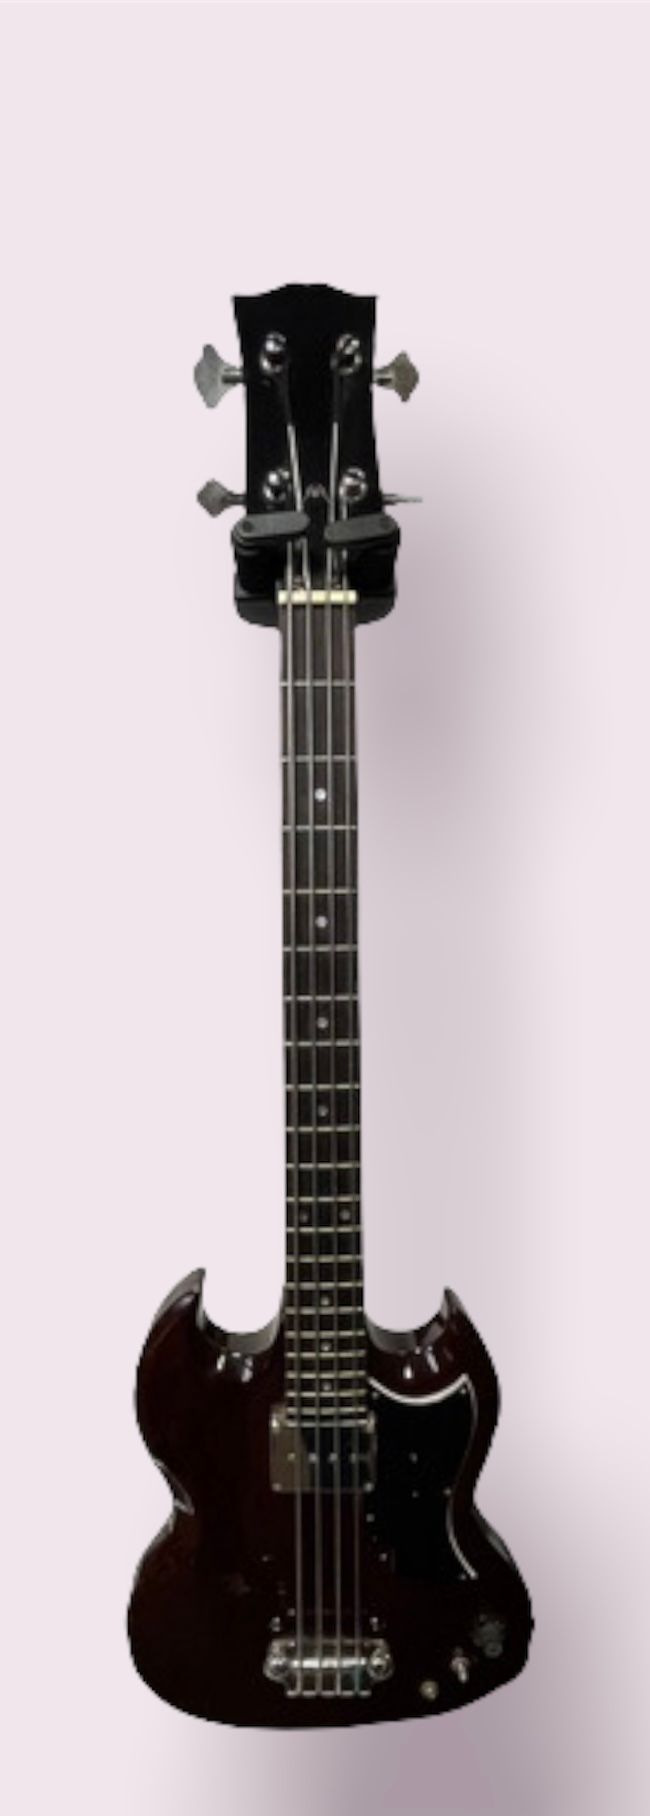 Null 电子低音吉他，SG型

经清漆处理的木材

(有少量磨损痕迹，背面有明显孔洞)

带灰色箱子（锁和铰链生锈了）